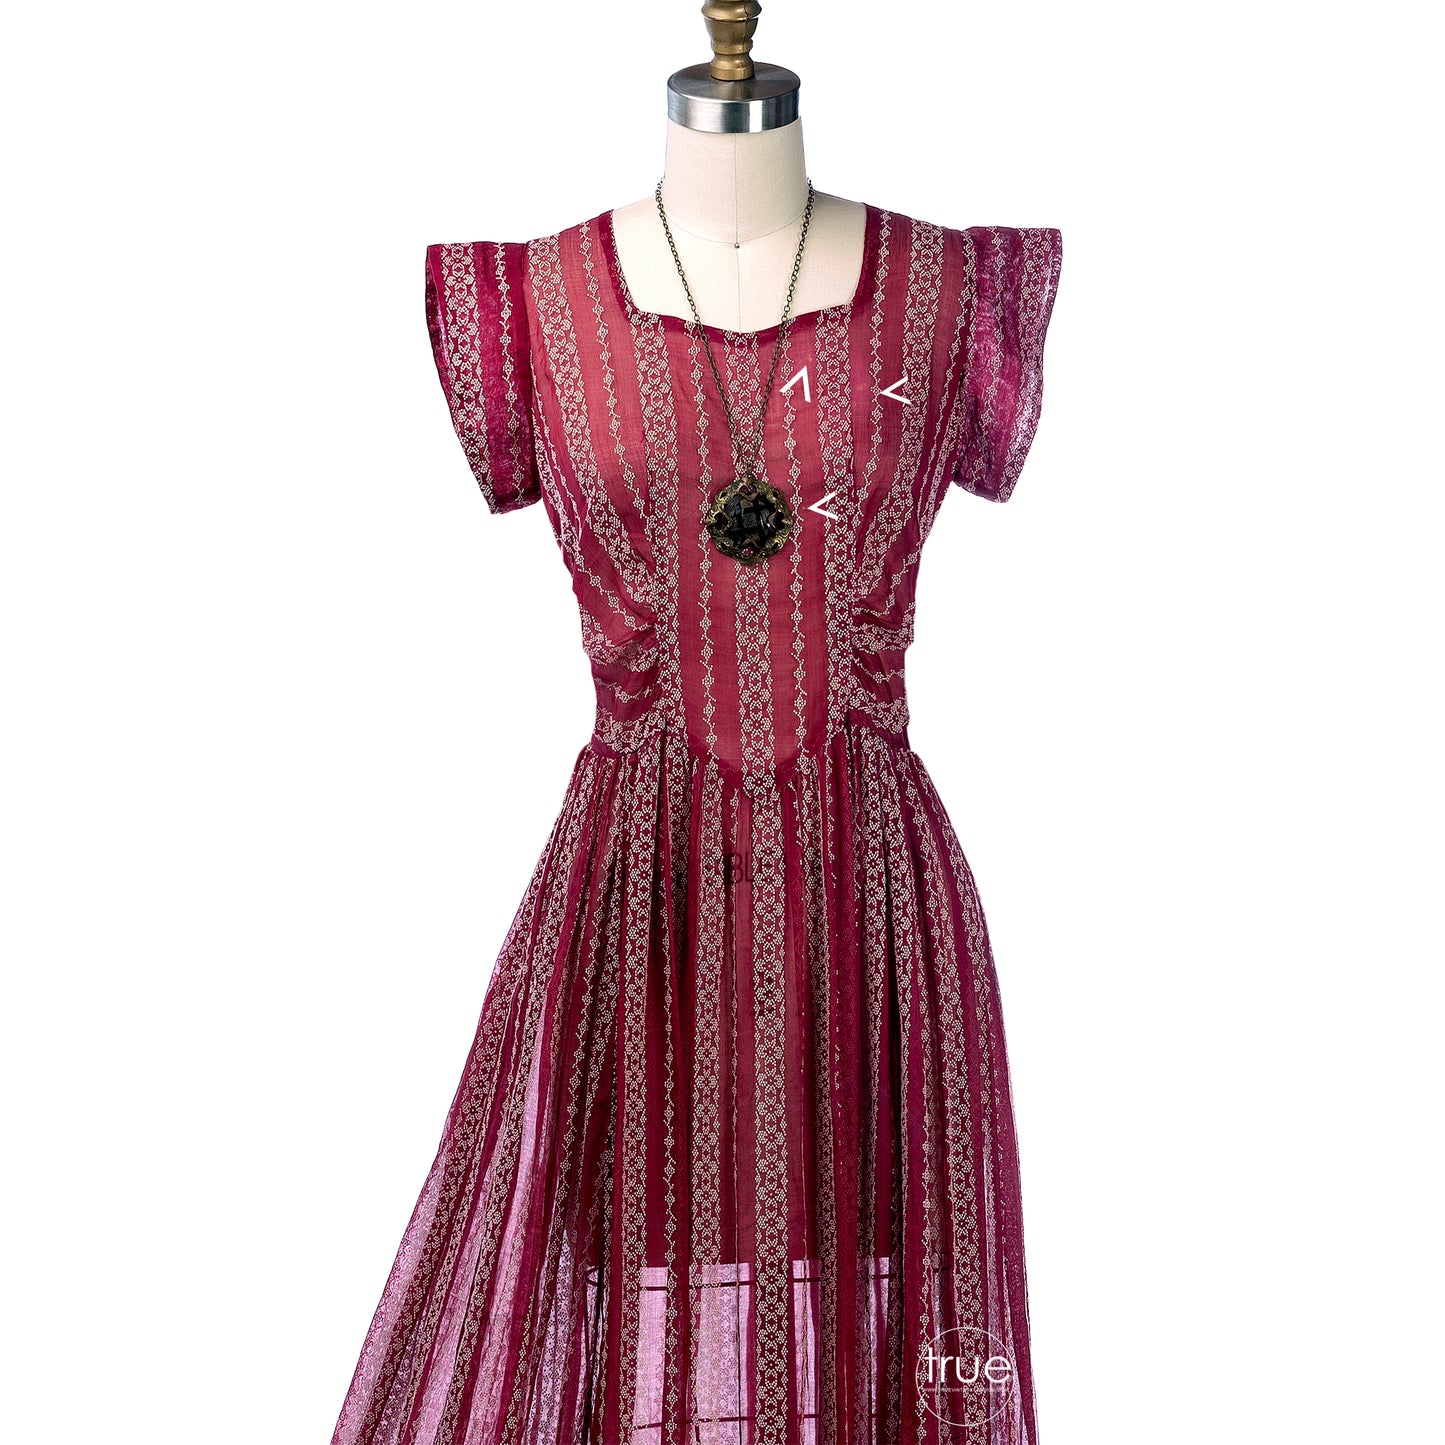 vintage 1930's dress ...flocked cranberry organza semi-sheer midi dress